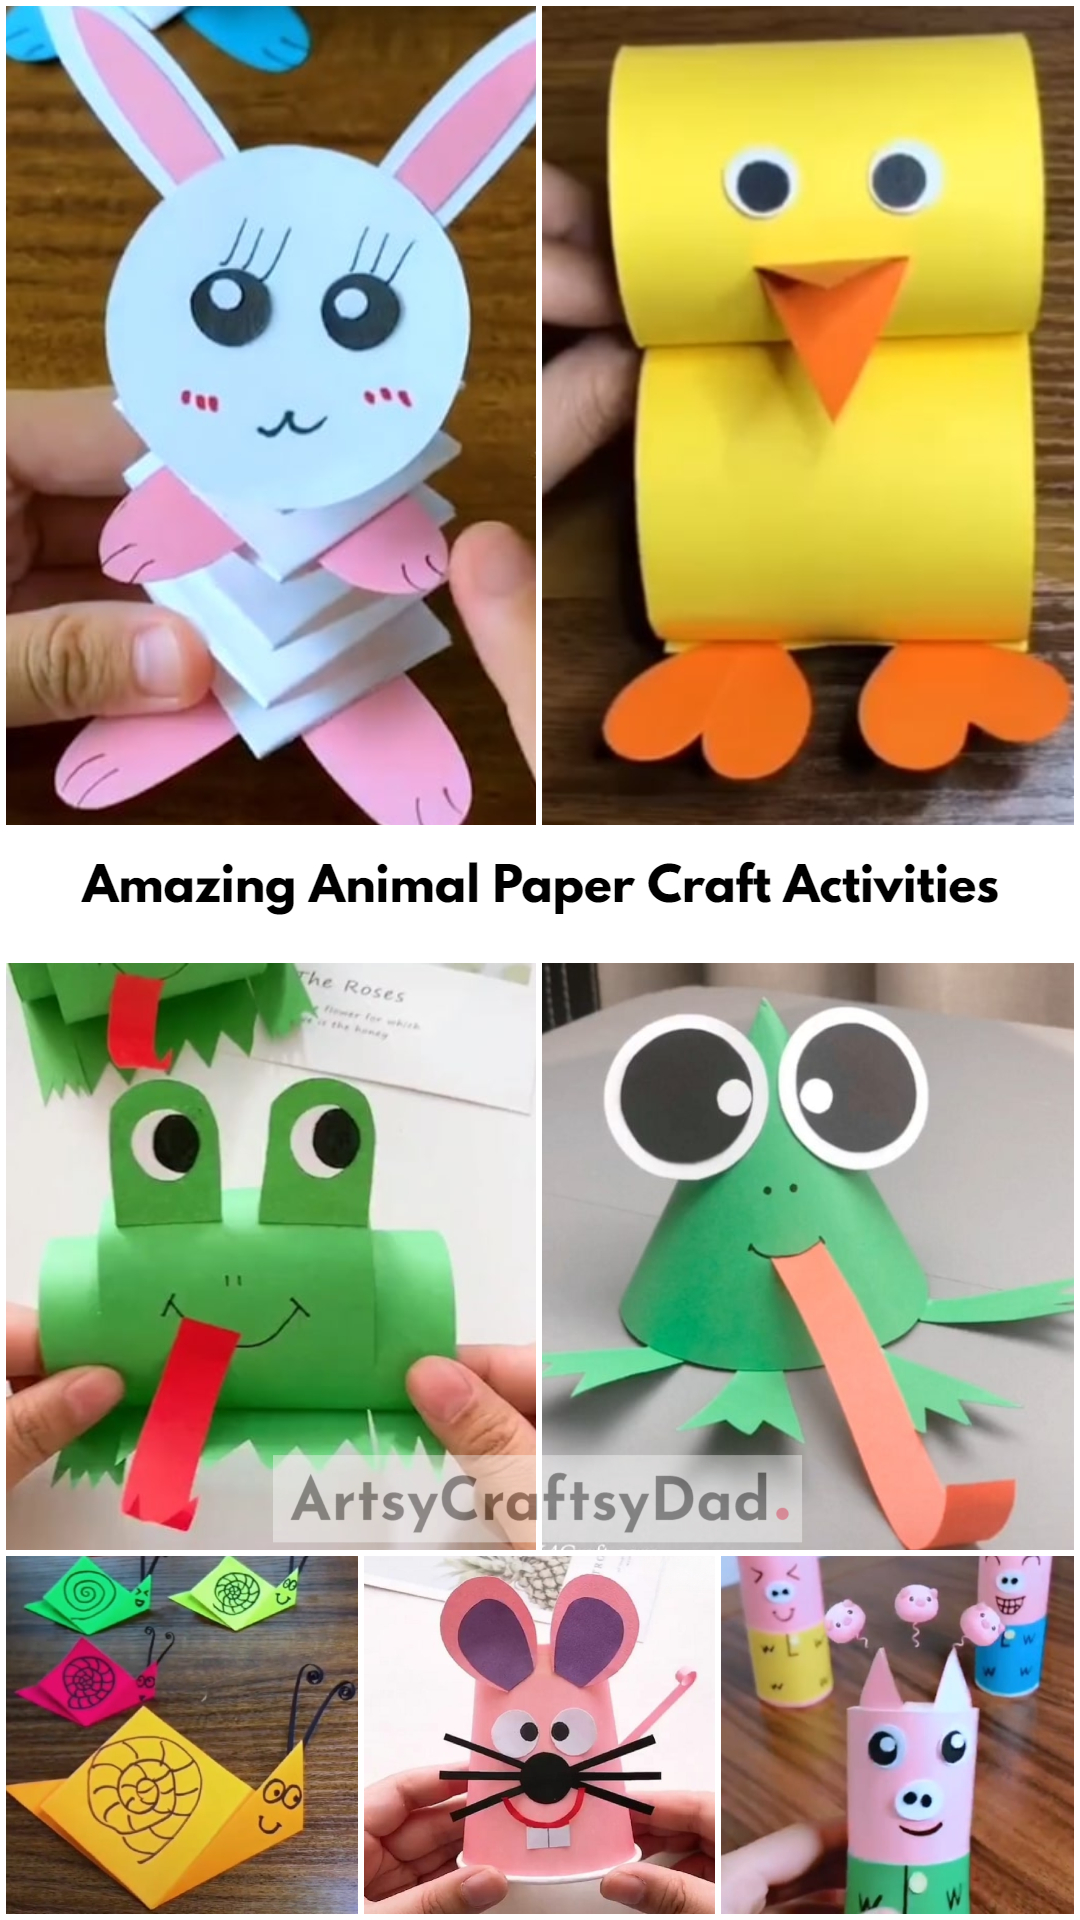 Amazing Animal Paper Craft Activities For Kids